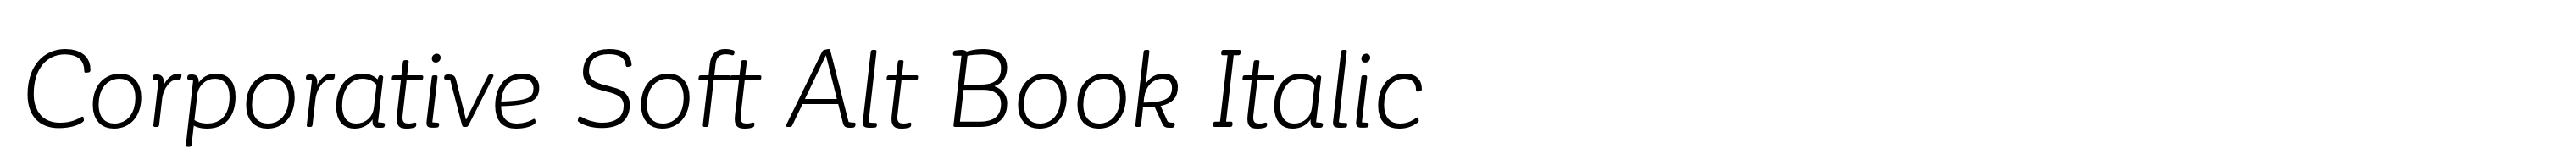 Corporative Soft Alt Book Italic